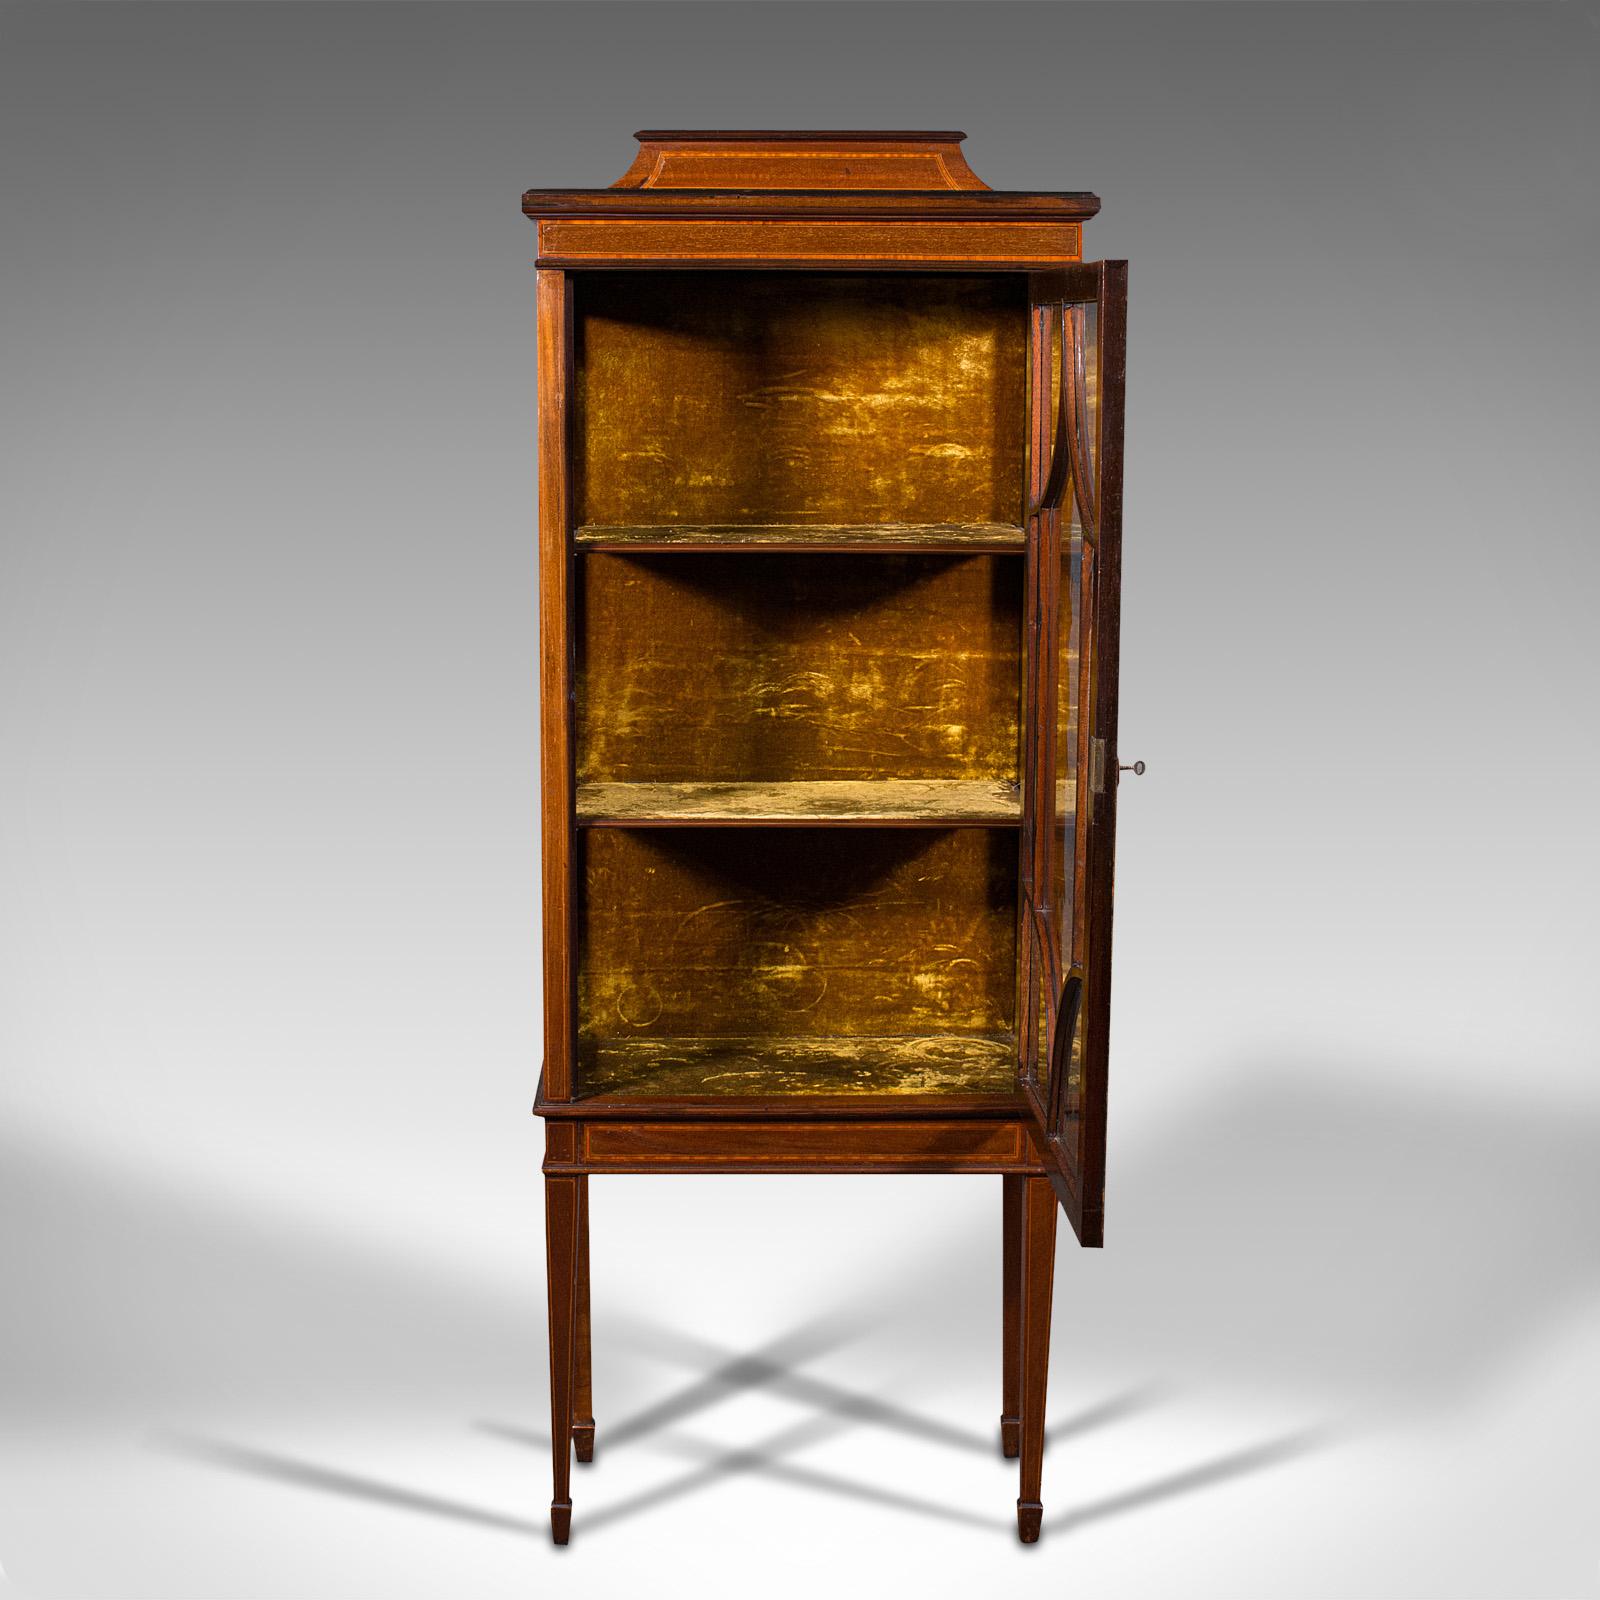 British Antique Pier Cabinet on Stand, English, Walnut, Glazed Display Case, Edwardian